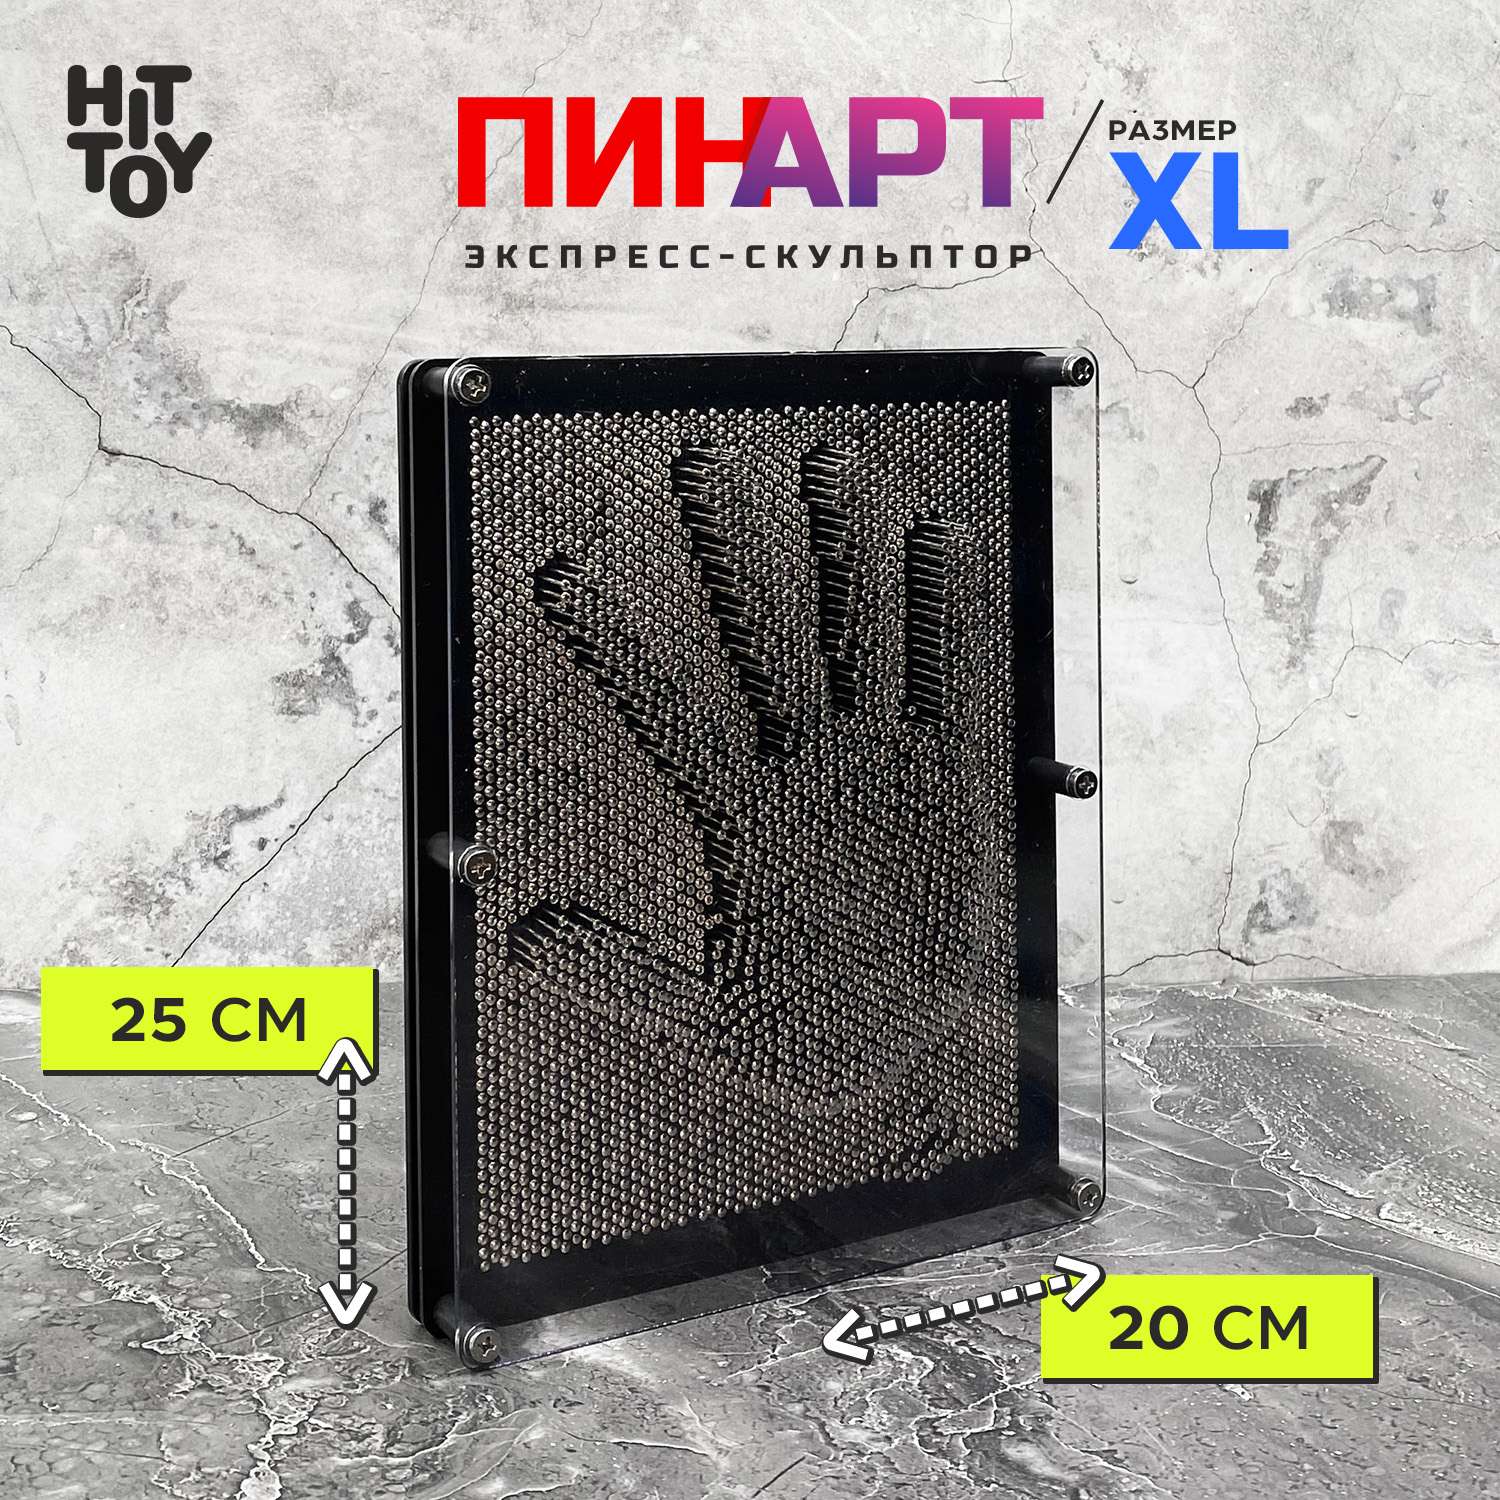 Игрушка-антистресс HitToy Экспресс-скульптор Pinart Классик XL металл - фото 1